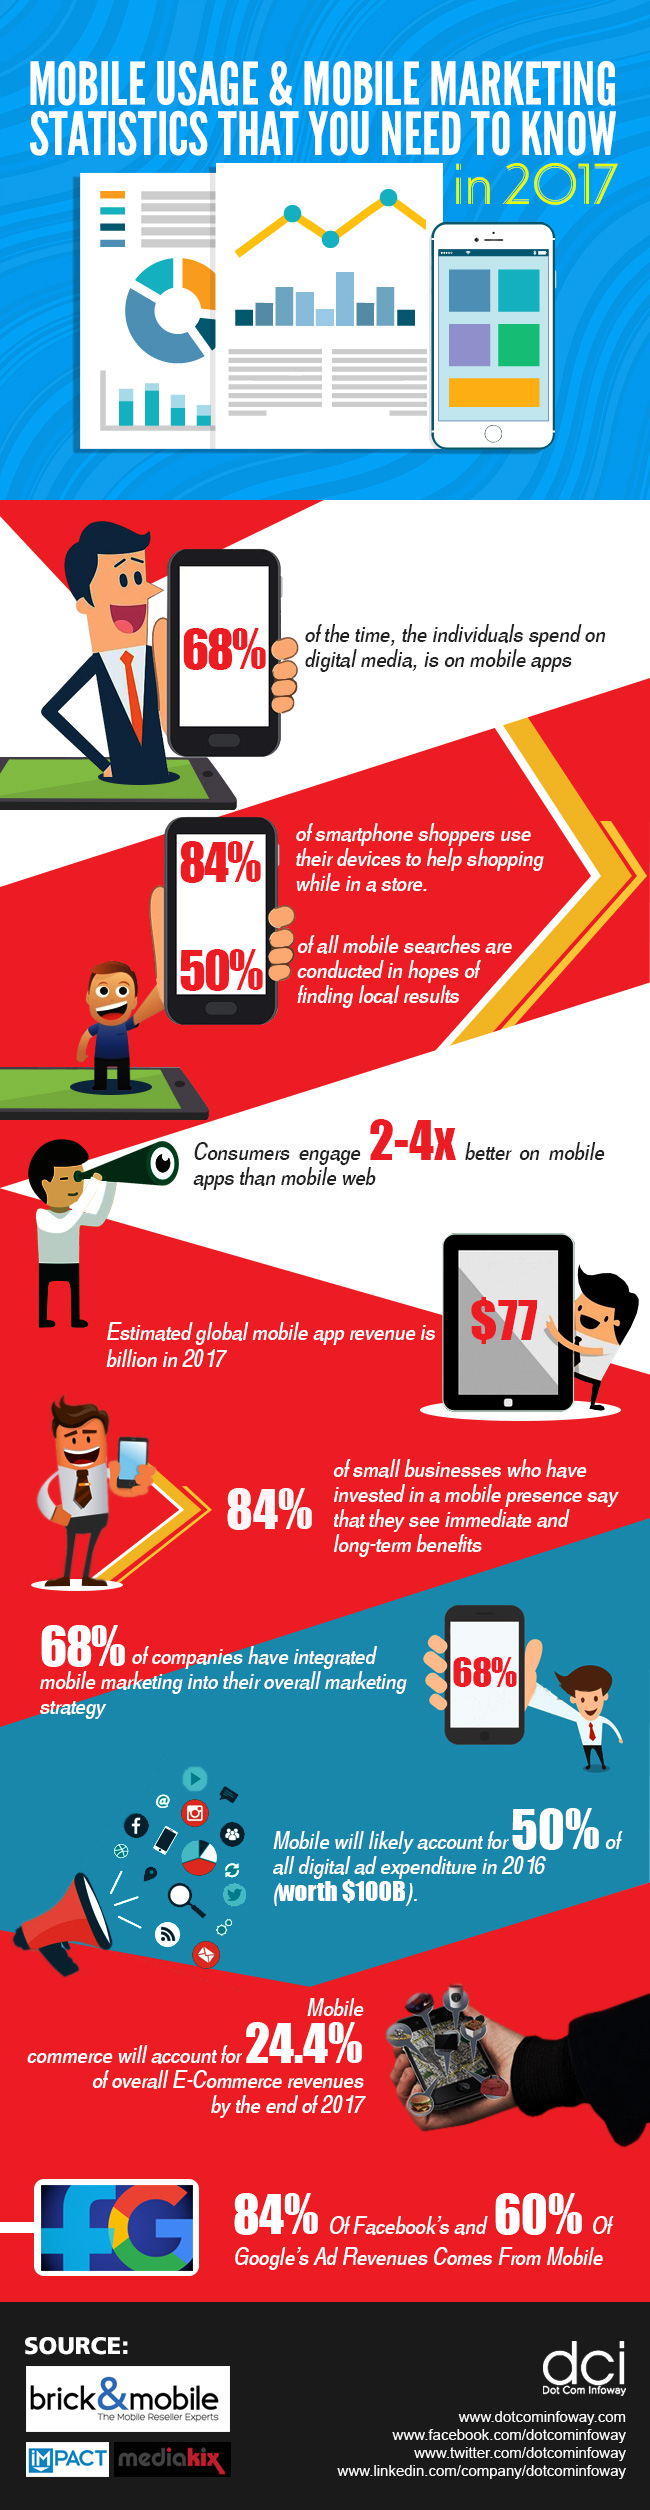 Mobile-Marketing-Statistics-2017